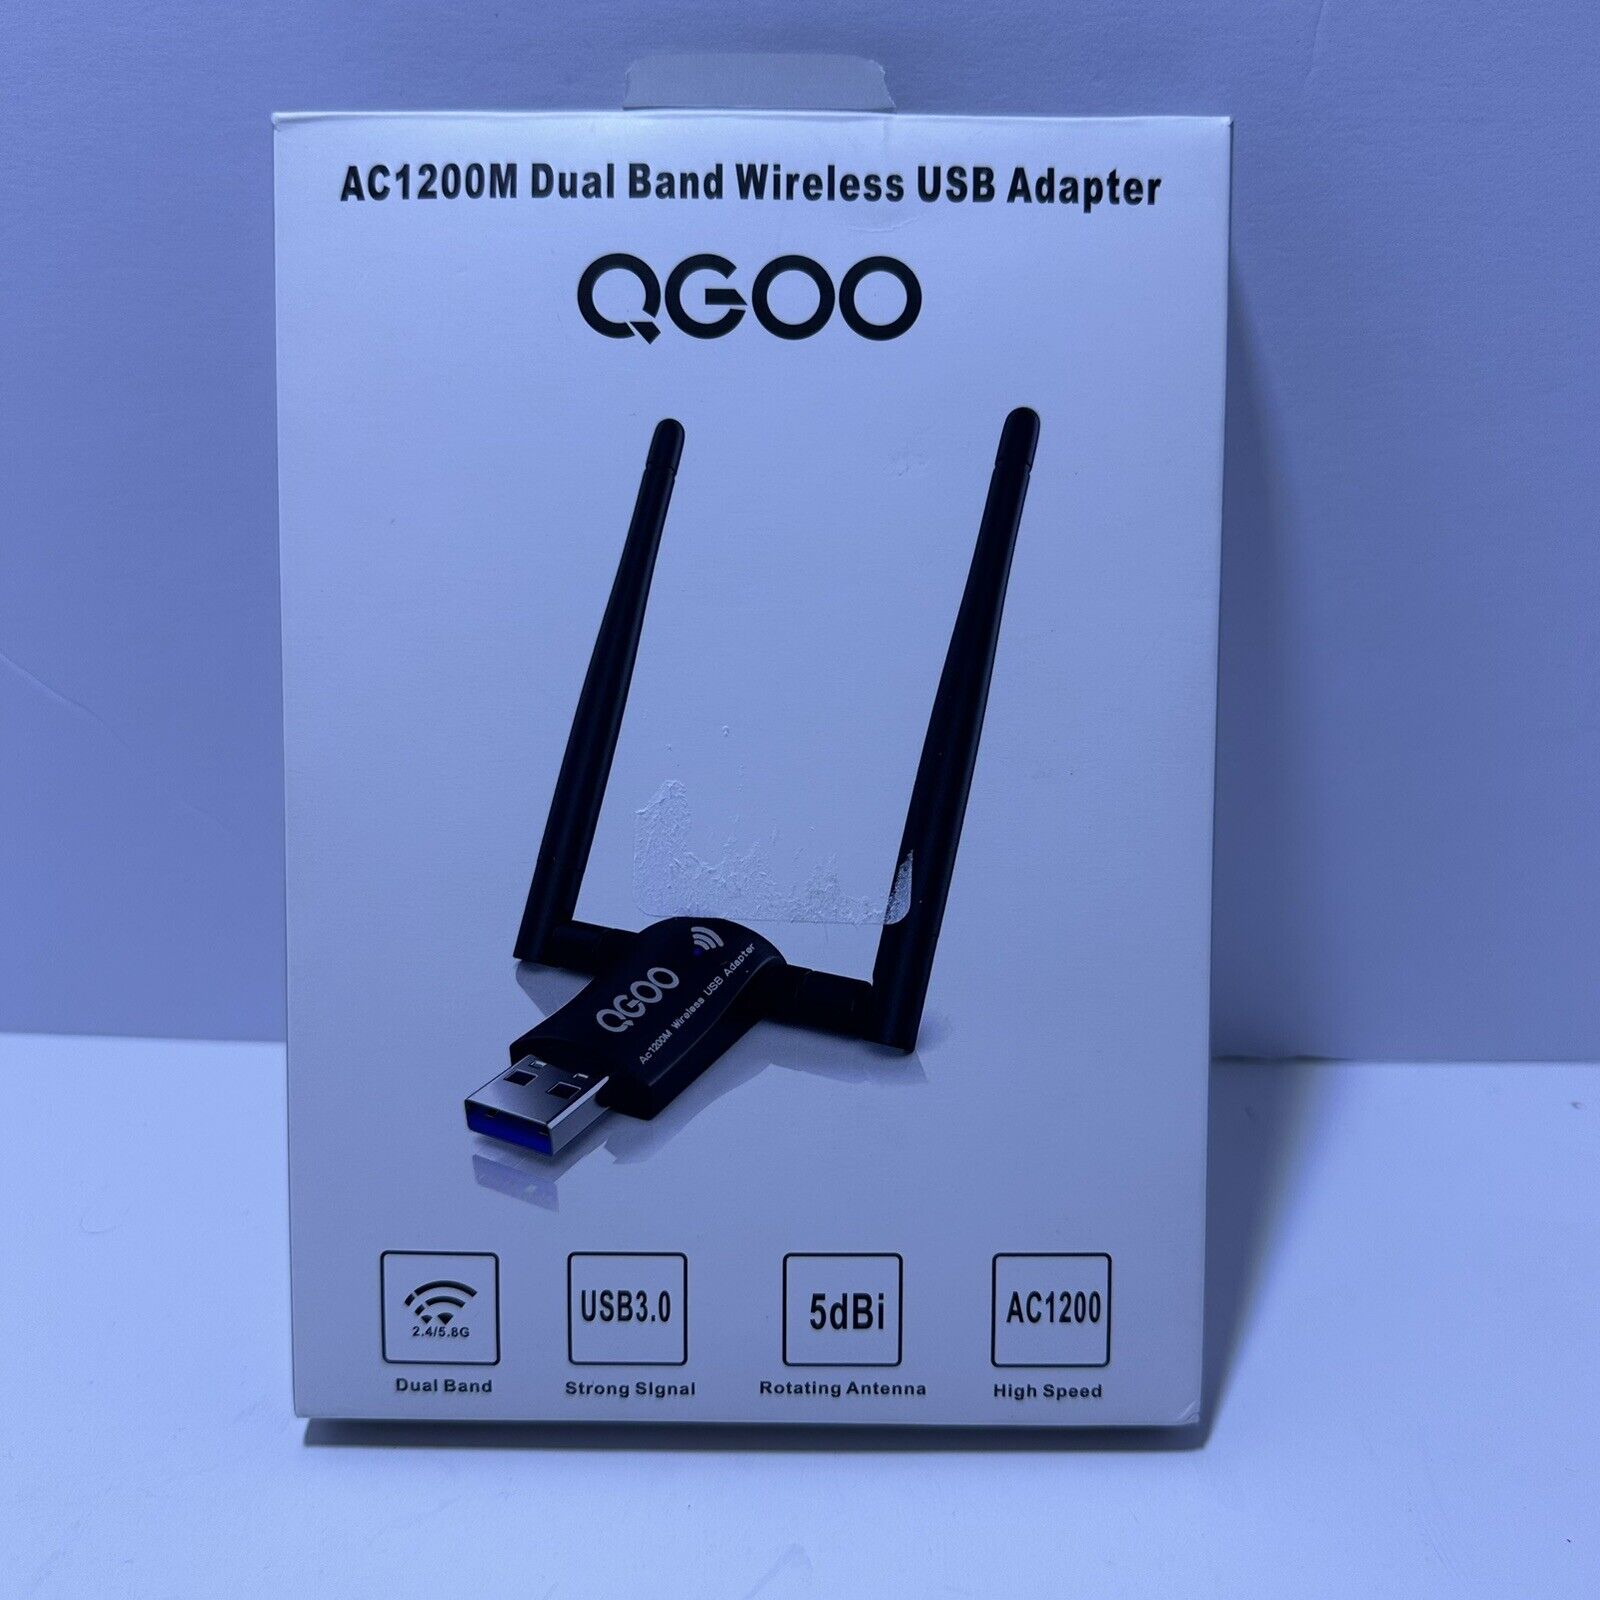 WiFi Adapter QGOO AC1200M Dual Band Wireless USB WiFi Adapter